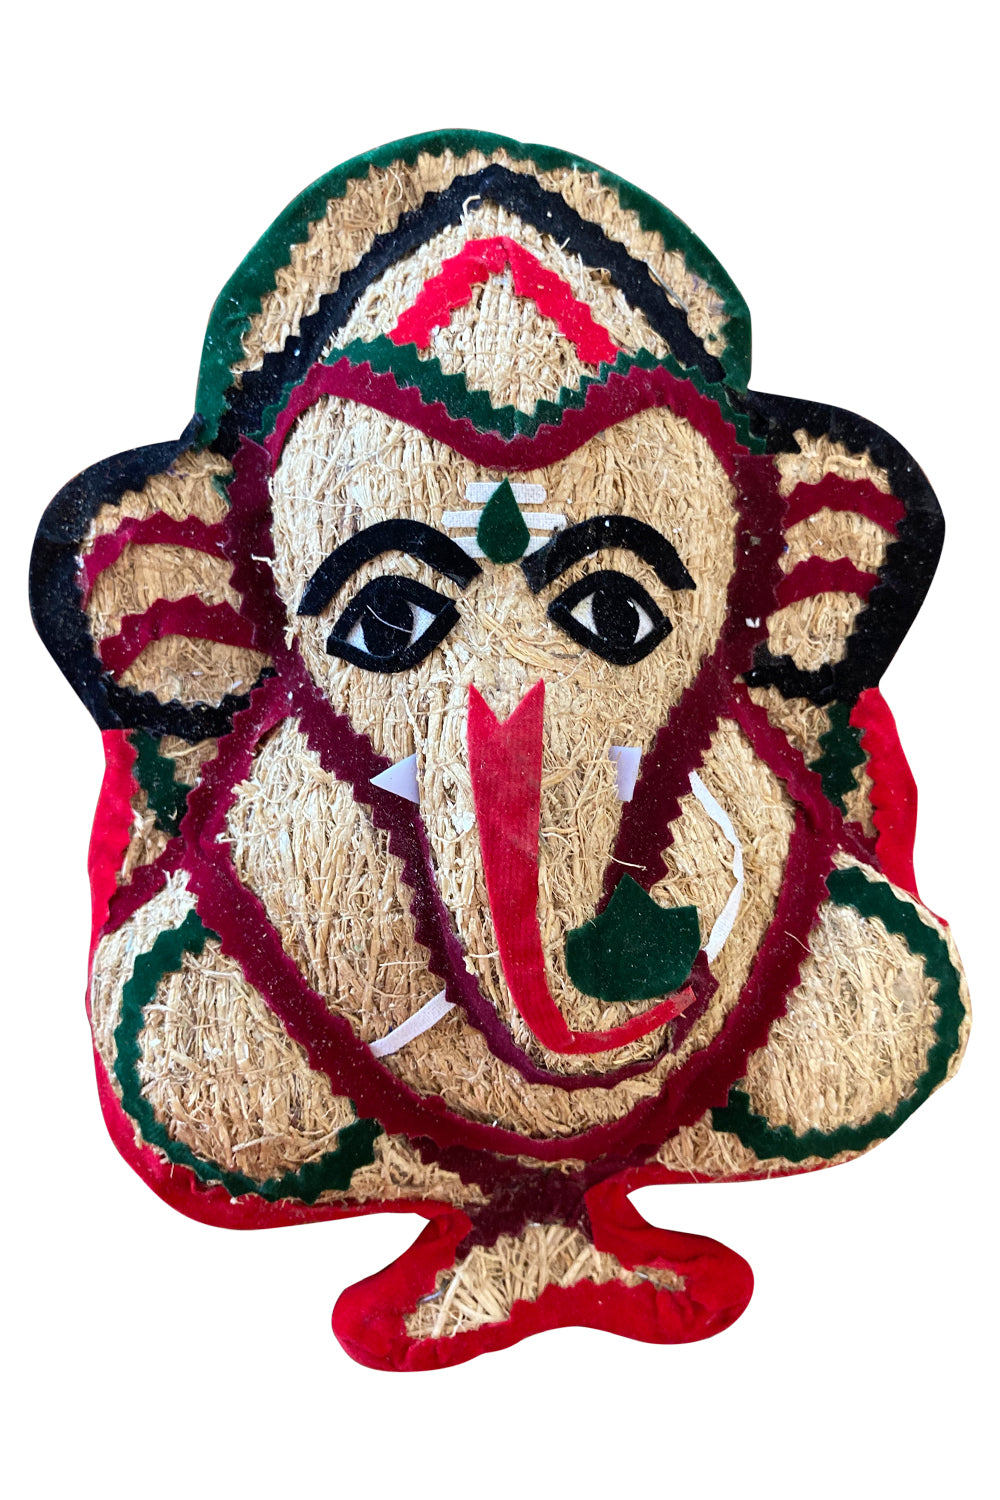 Southloom Handmade Vetiver Ganesha Handicraft (Made from Ramacham / Vetiver Plant)